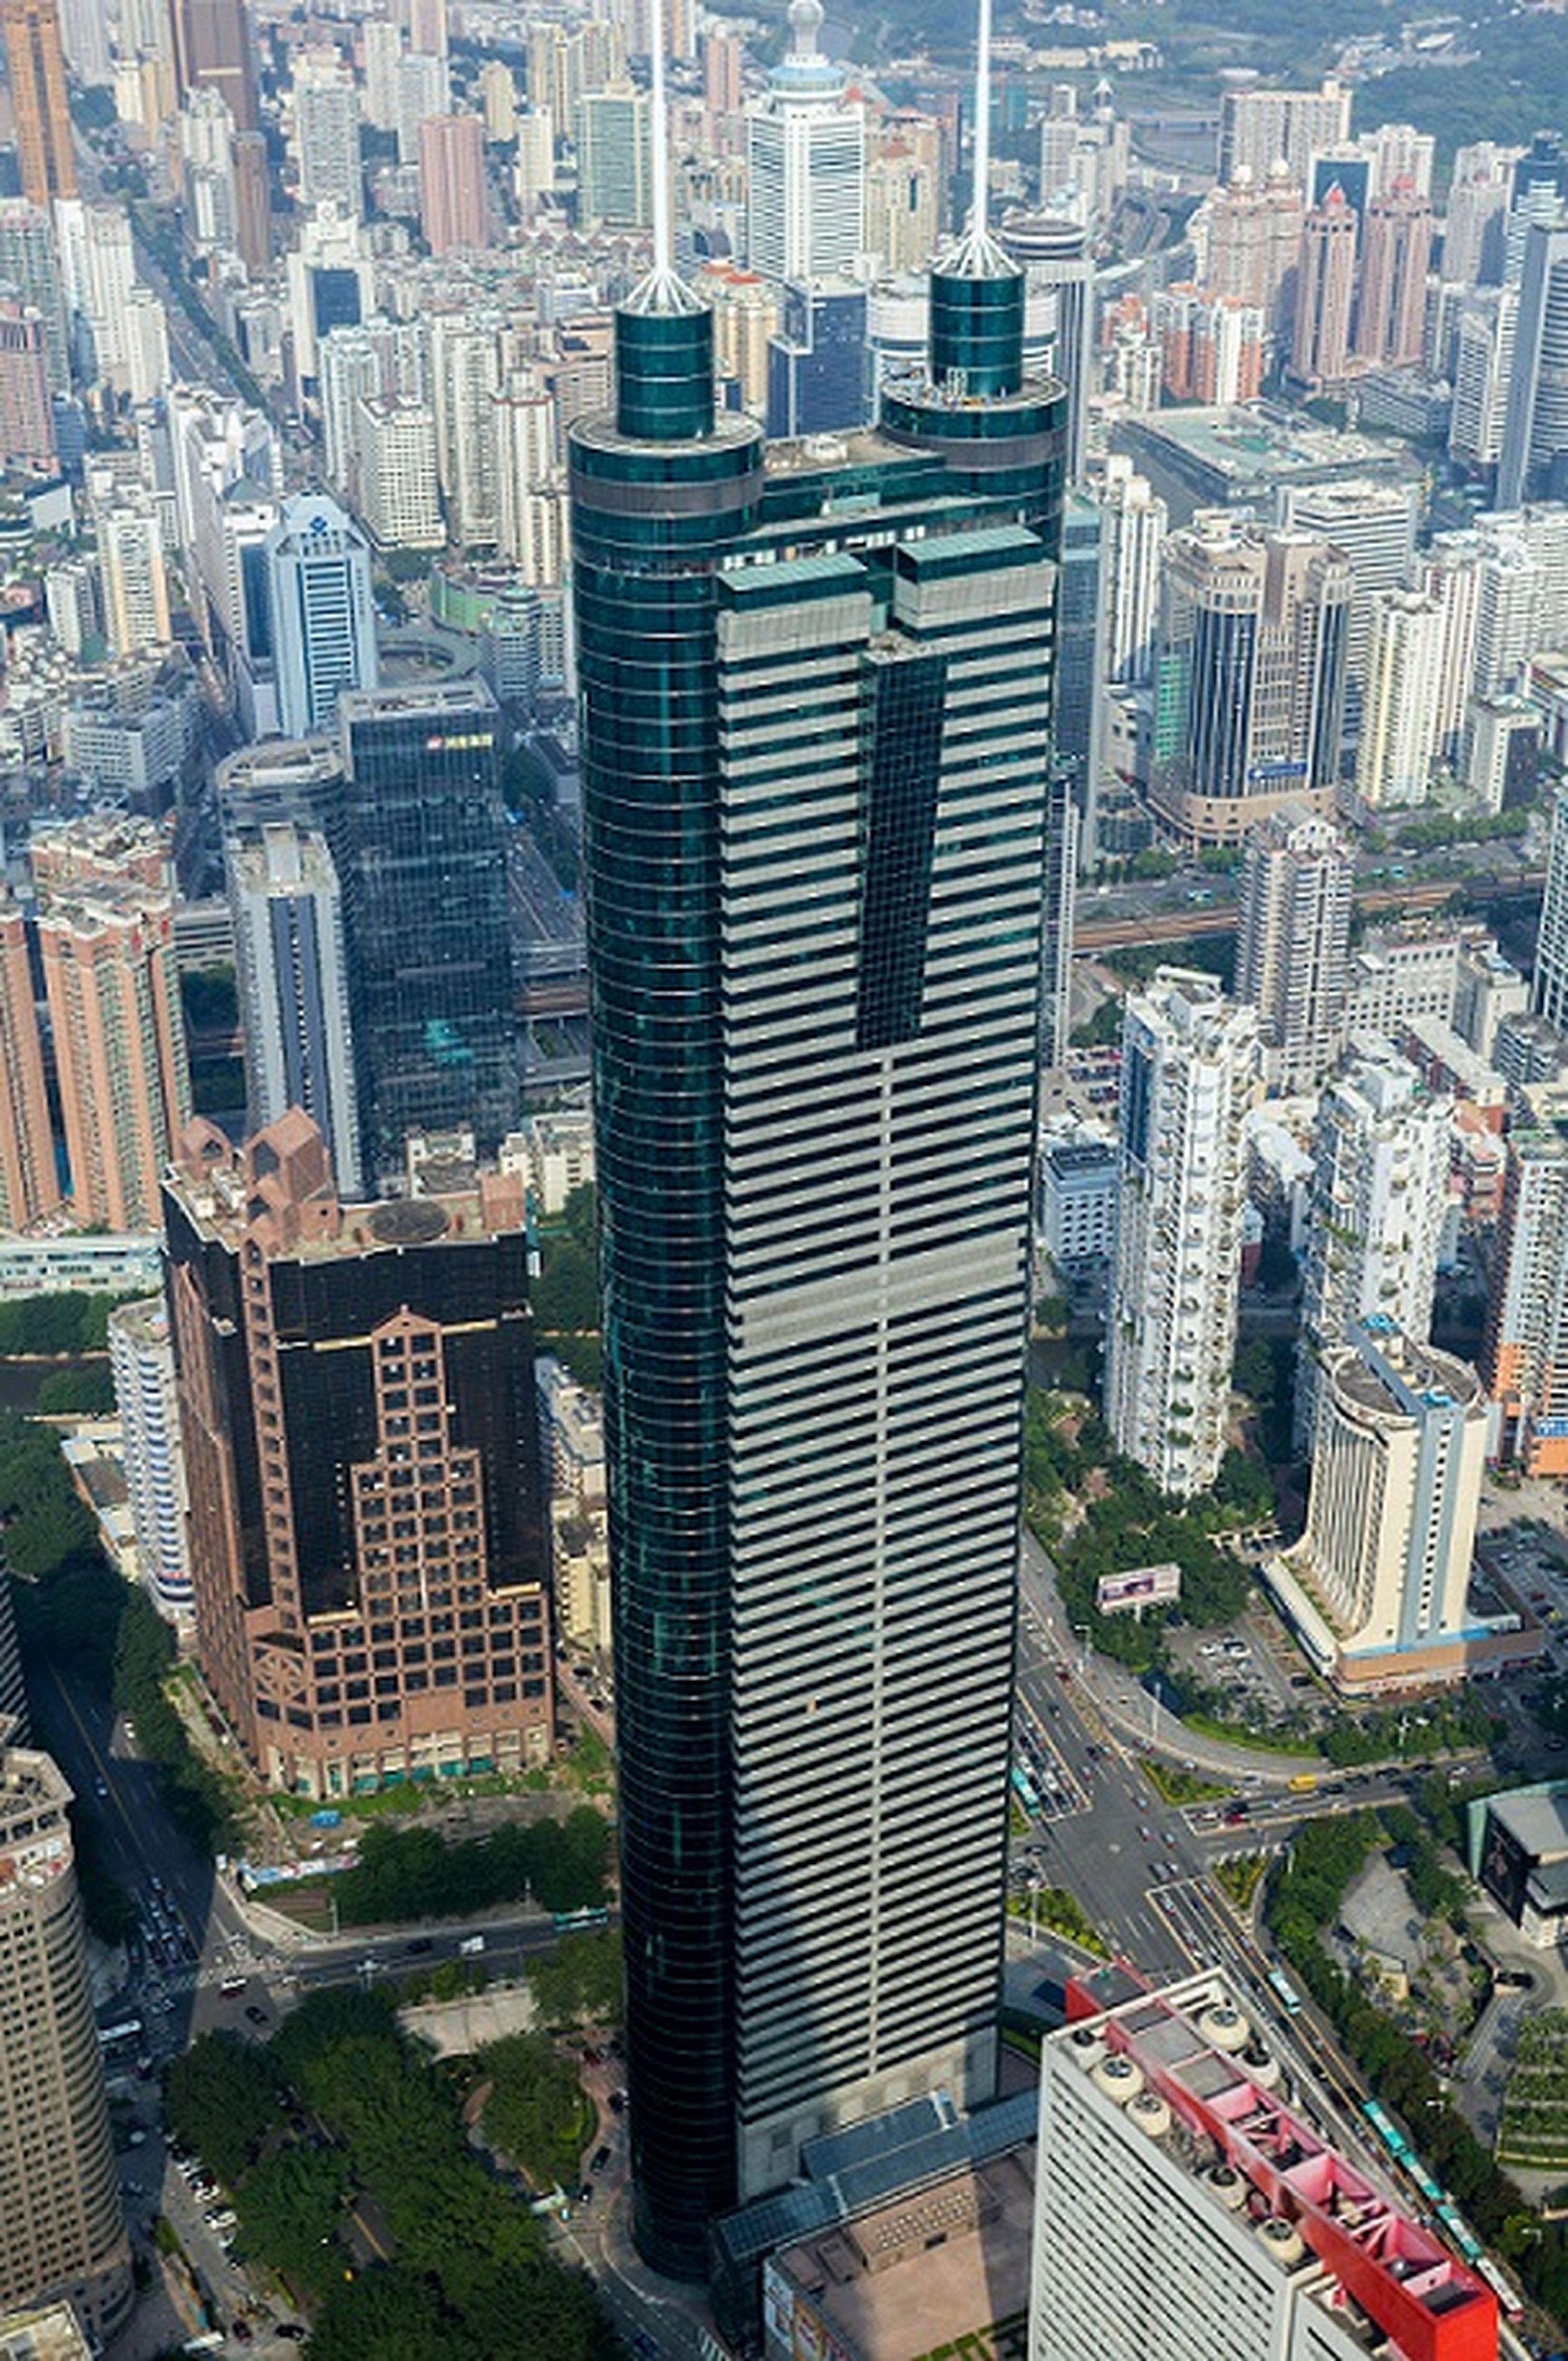 El edificio Diwang o Shun Hing Square, emblema del centro financiero de Shenzhen, China.